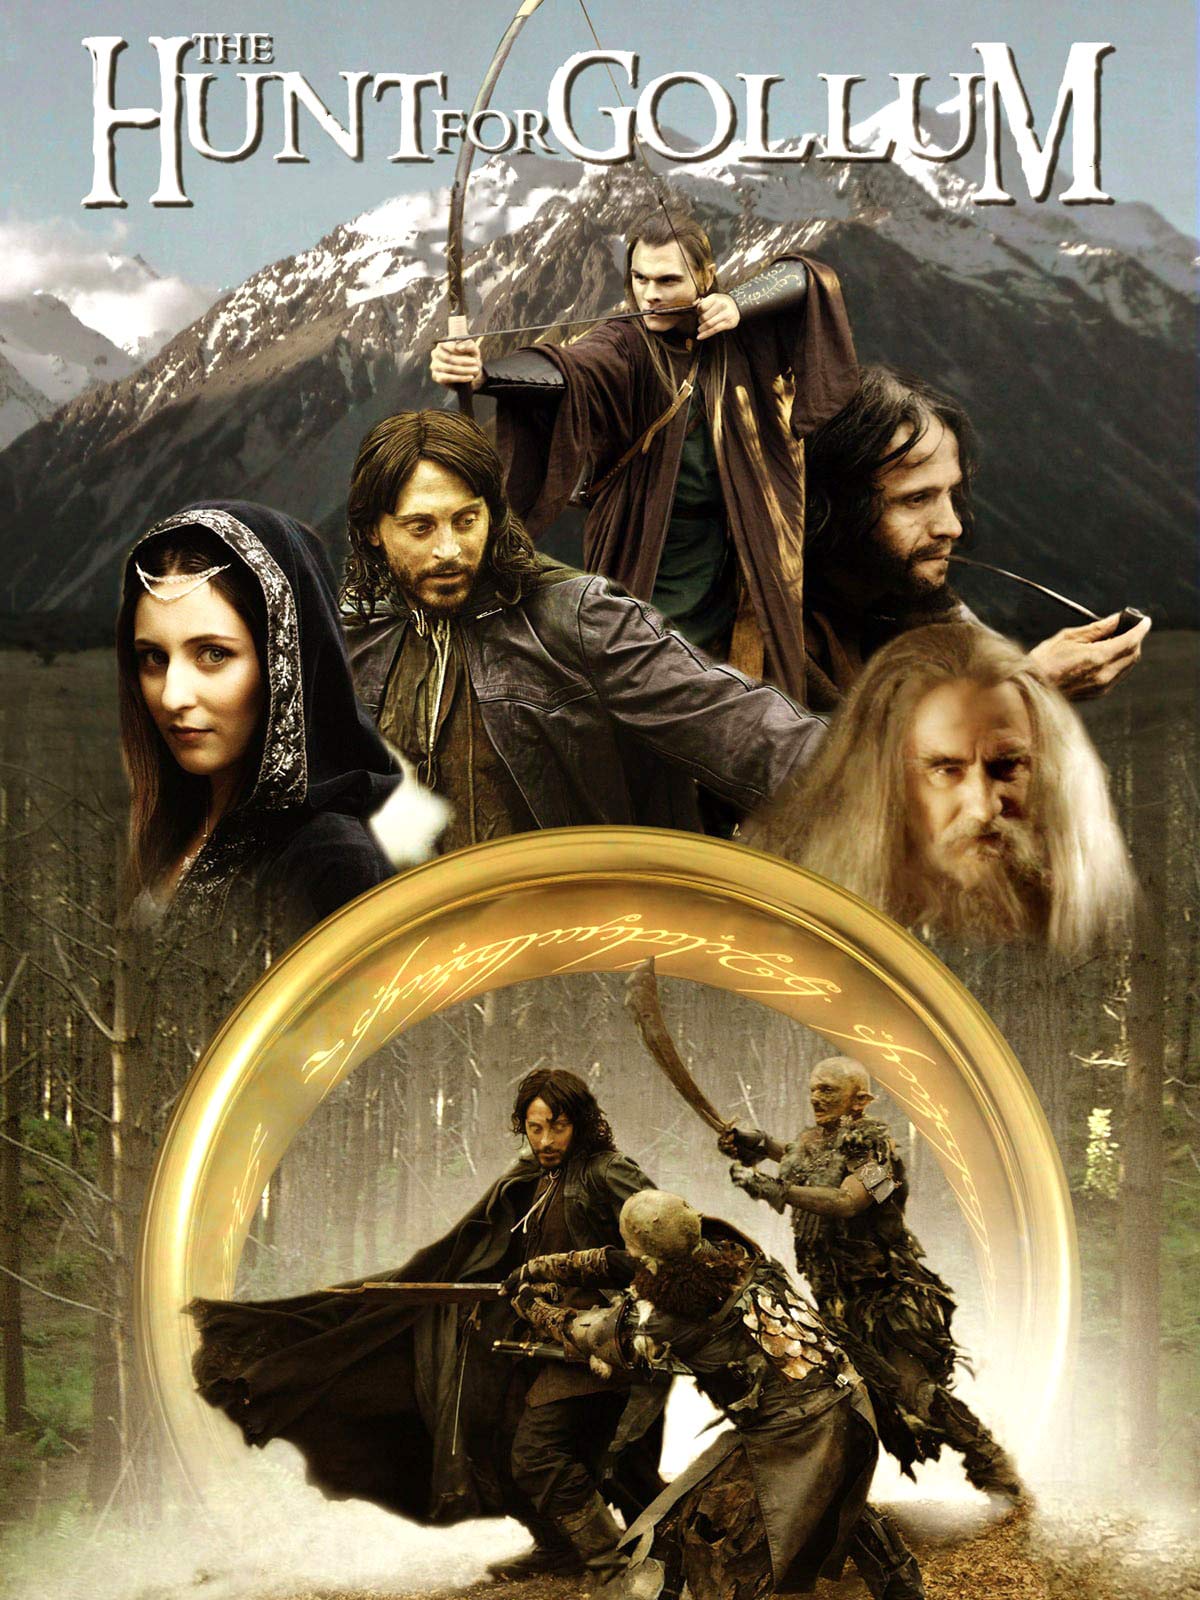 Gollum in The Hobbit, Overview & Actor - Video & Lesson Transcript